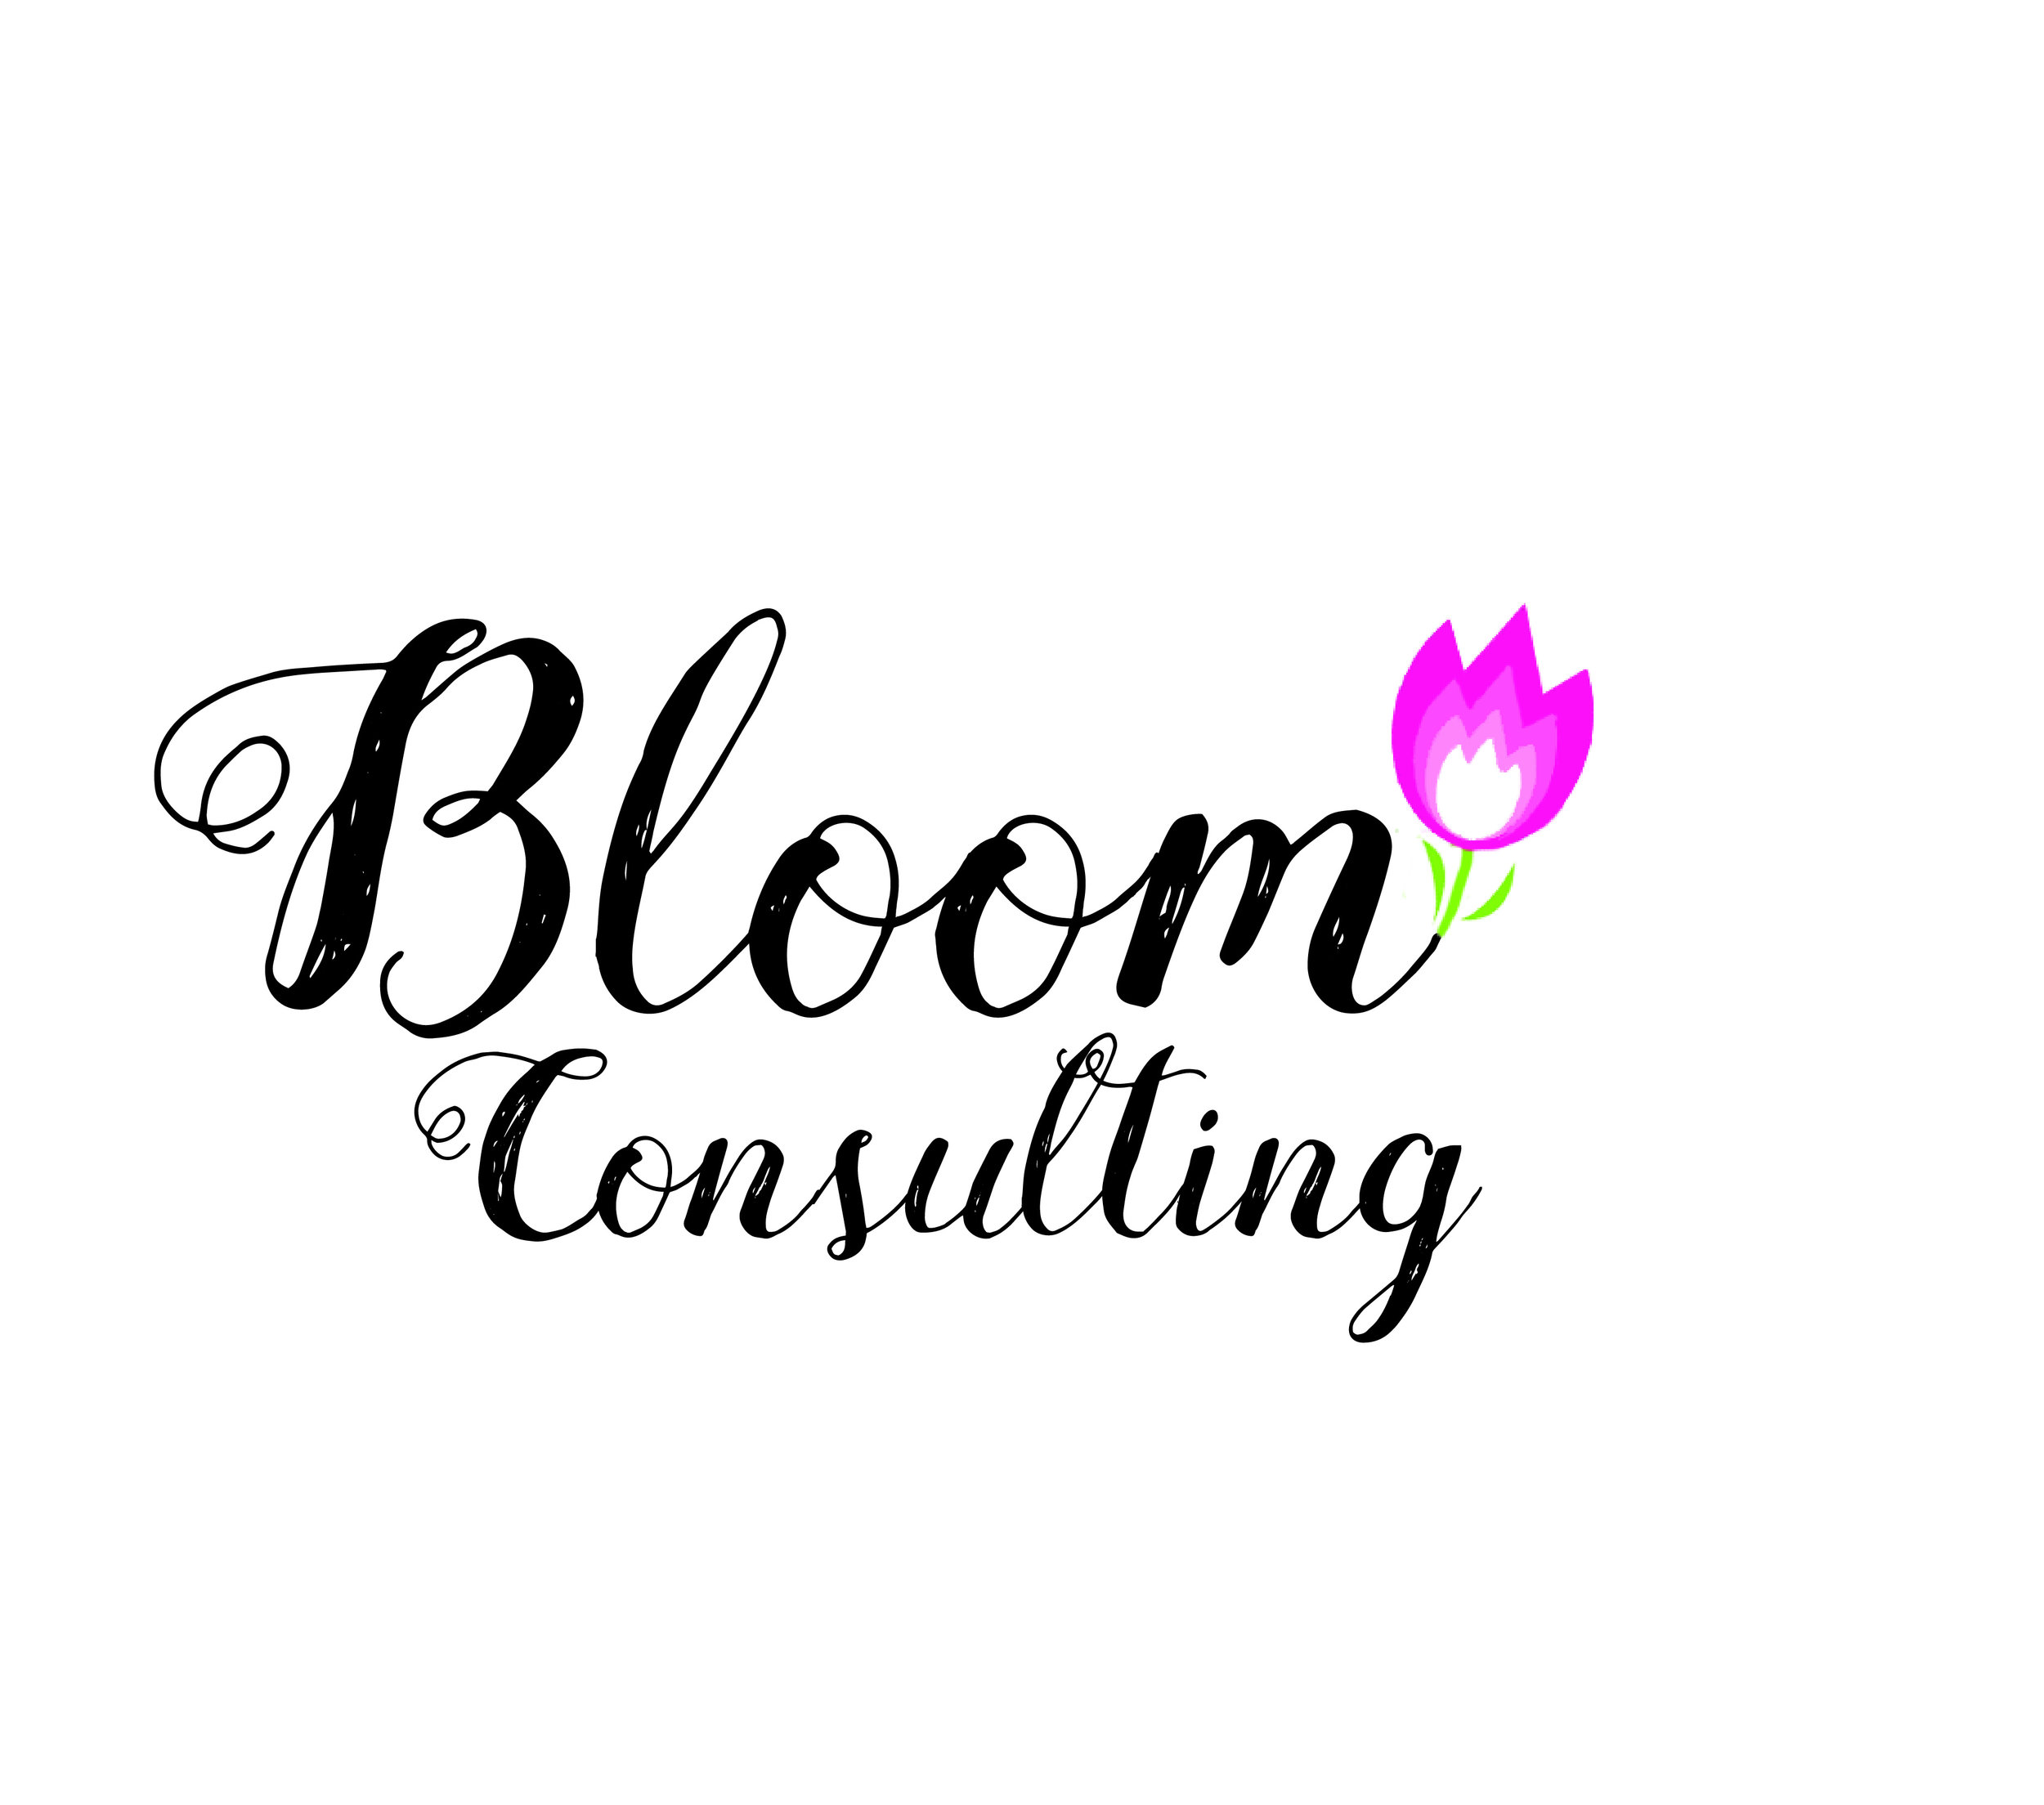 Bloom Consulting Block 2.jpg